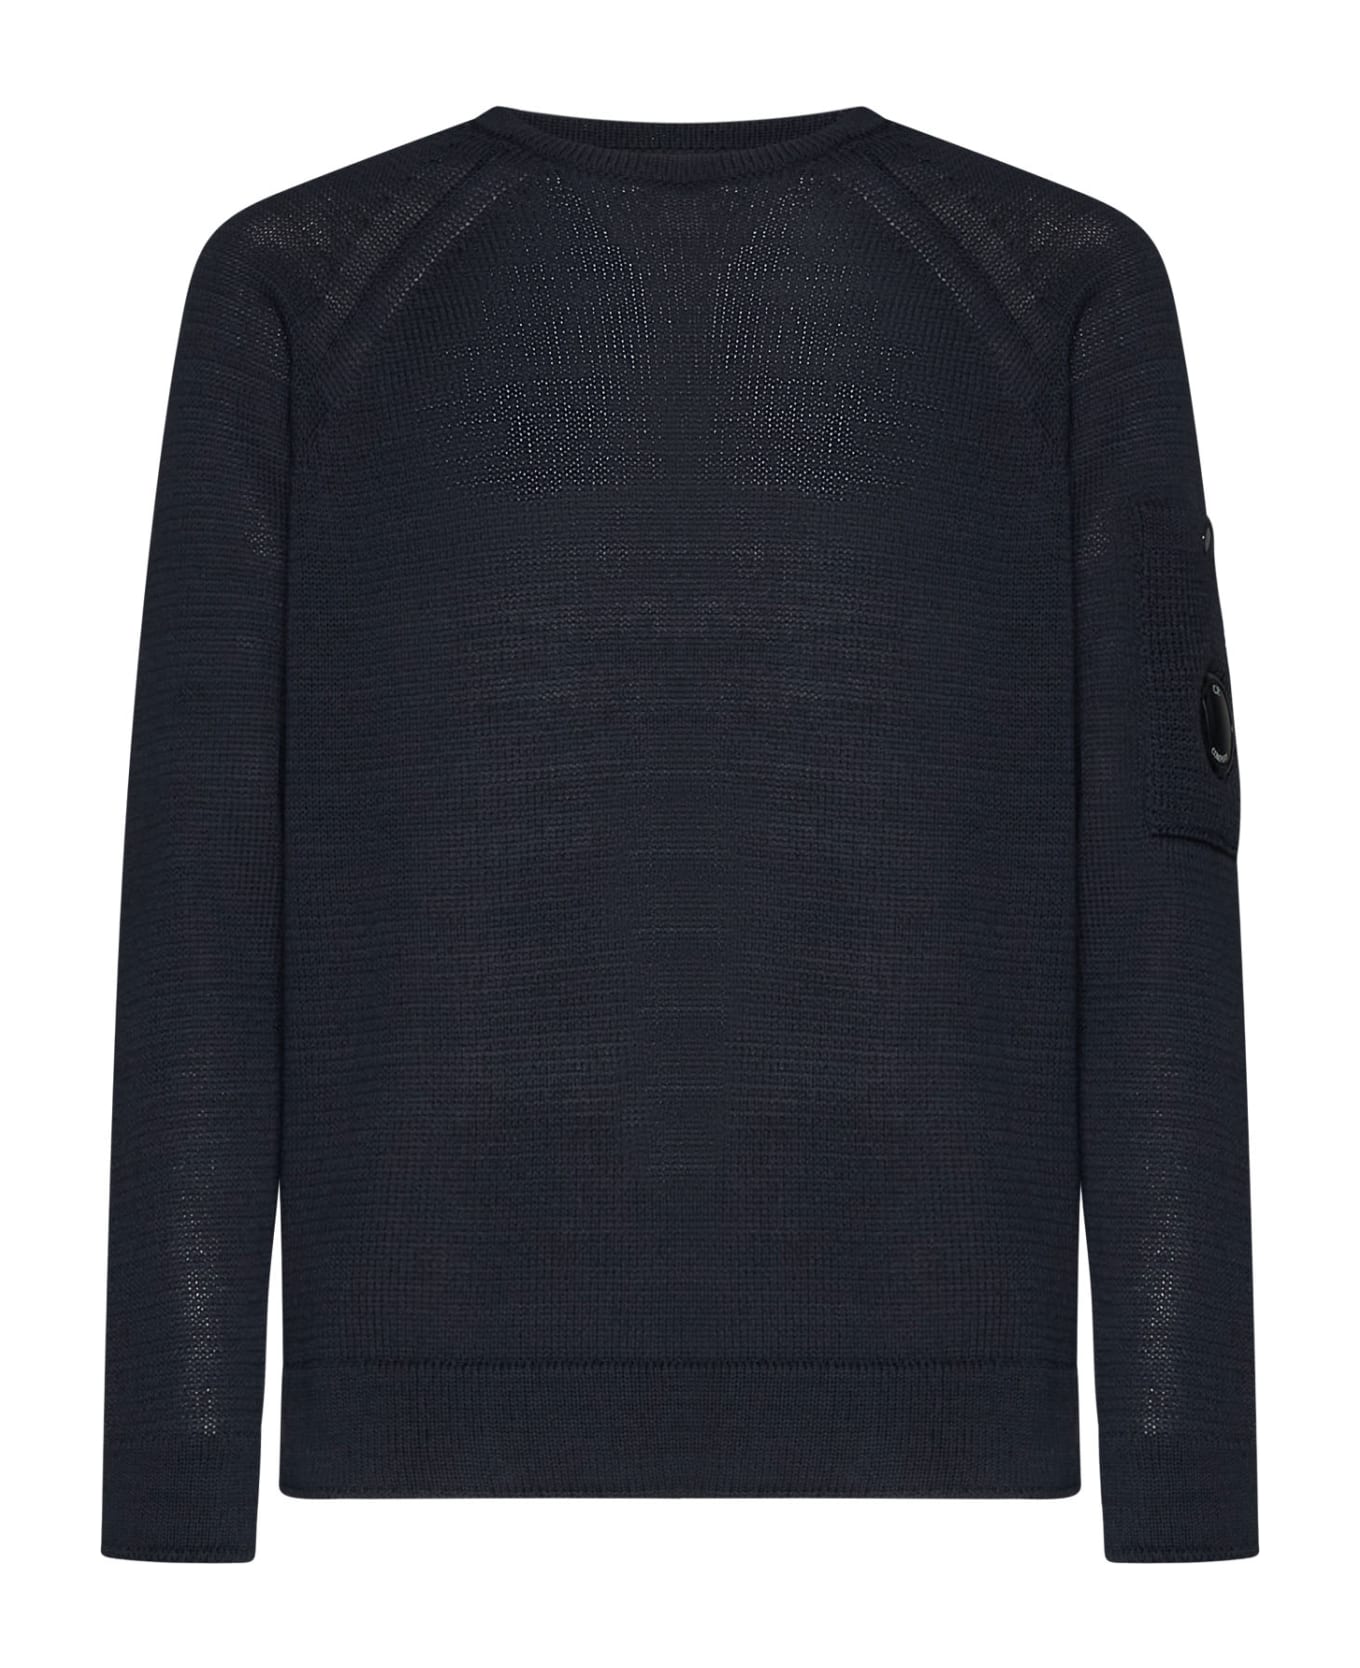 C.P. Company Sweater - Total eclipse ニットウェア